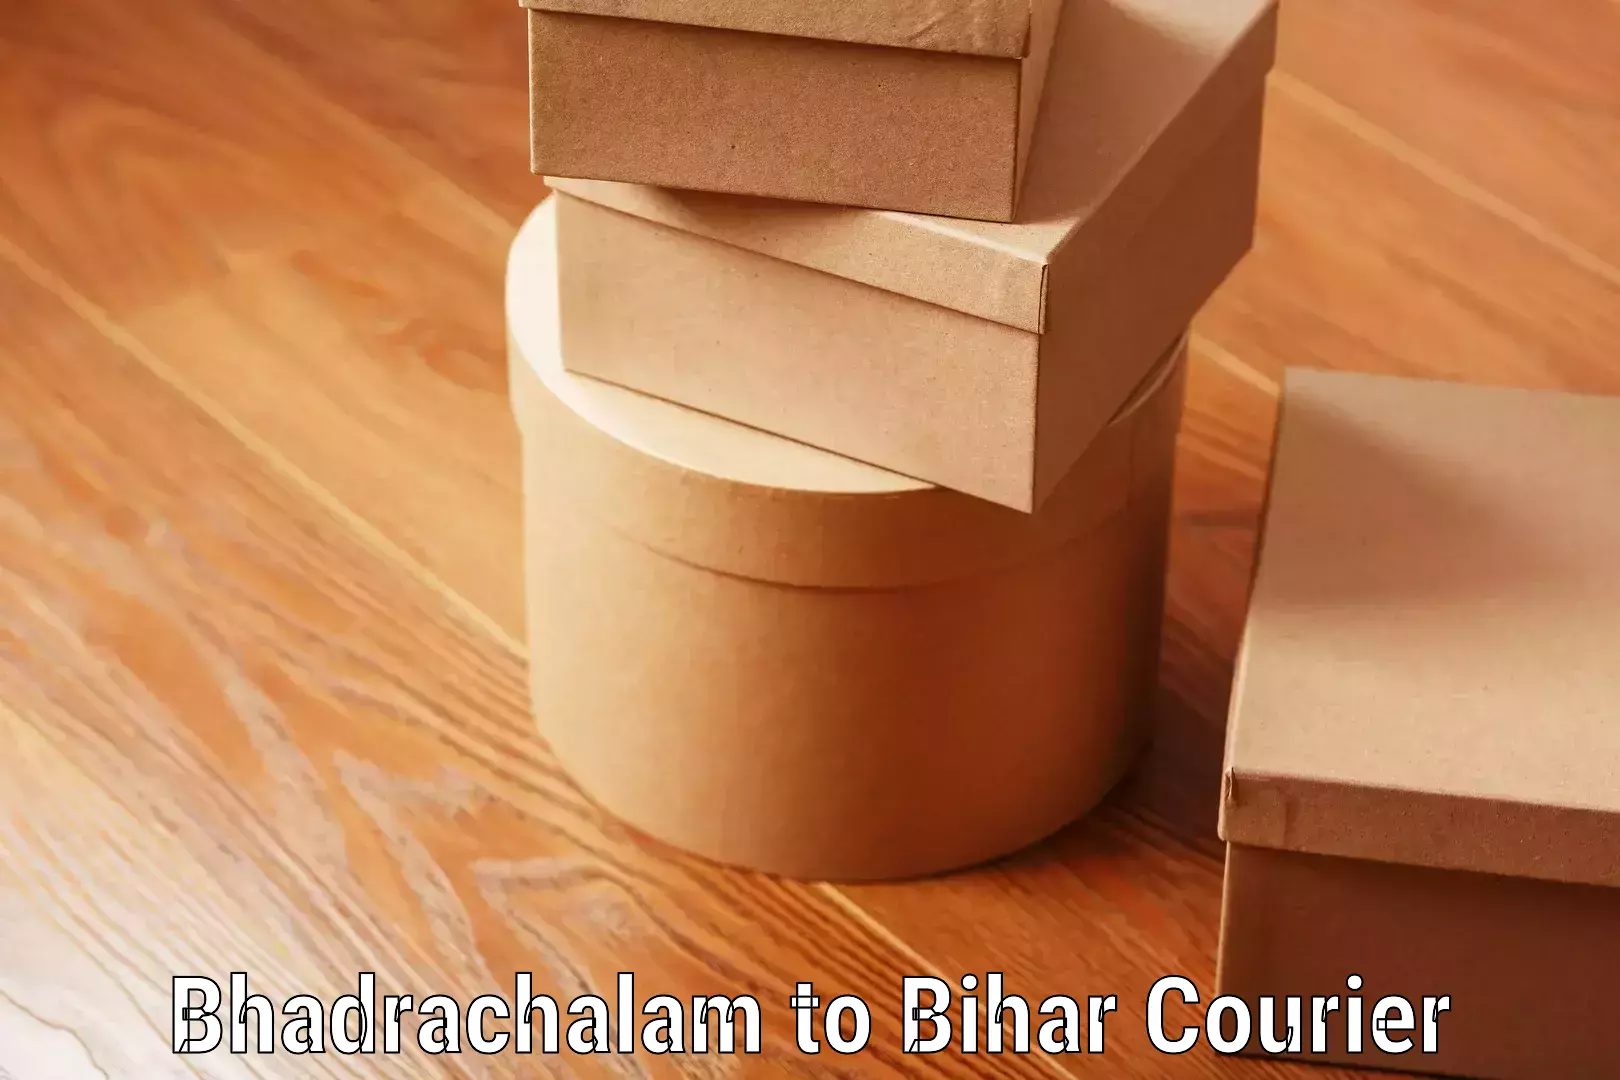 Luggage shipment tracking Bhadrachalam to Bhorey